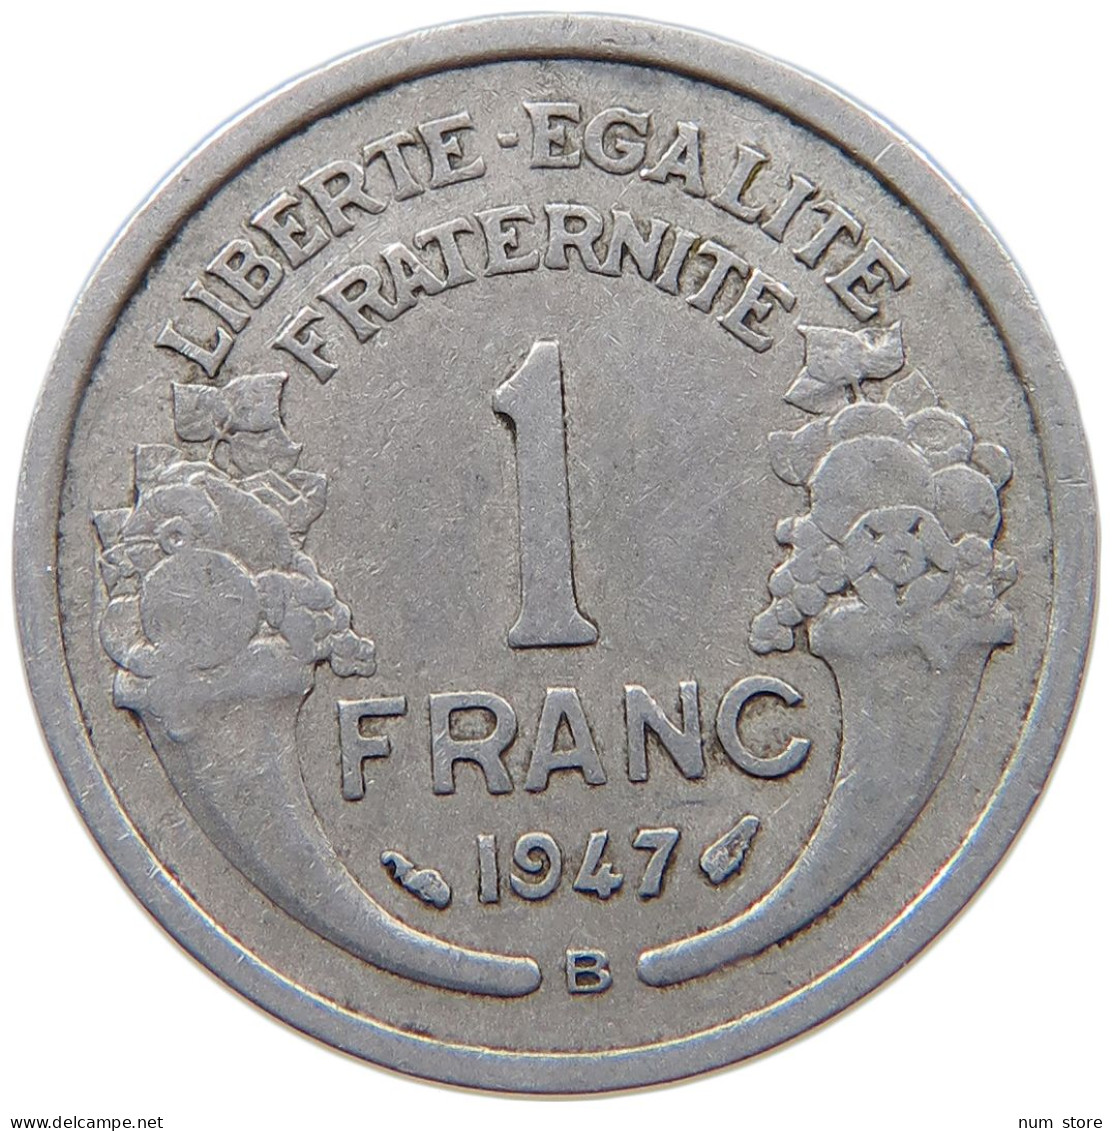 FRANCE 1 FRANC 1947 B #c060 0311 - 1 Franc